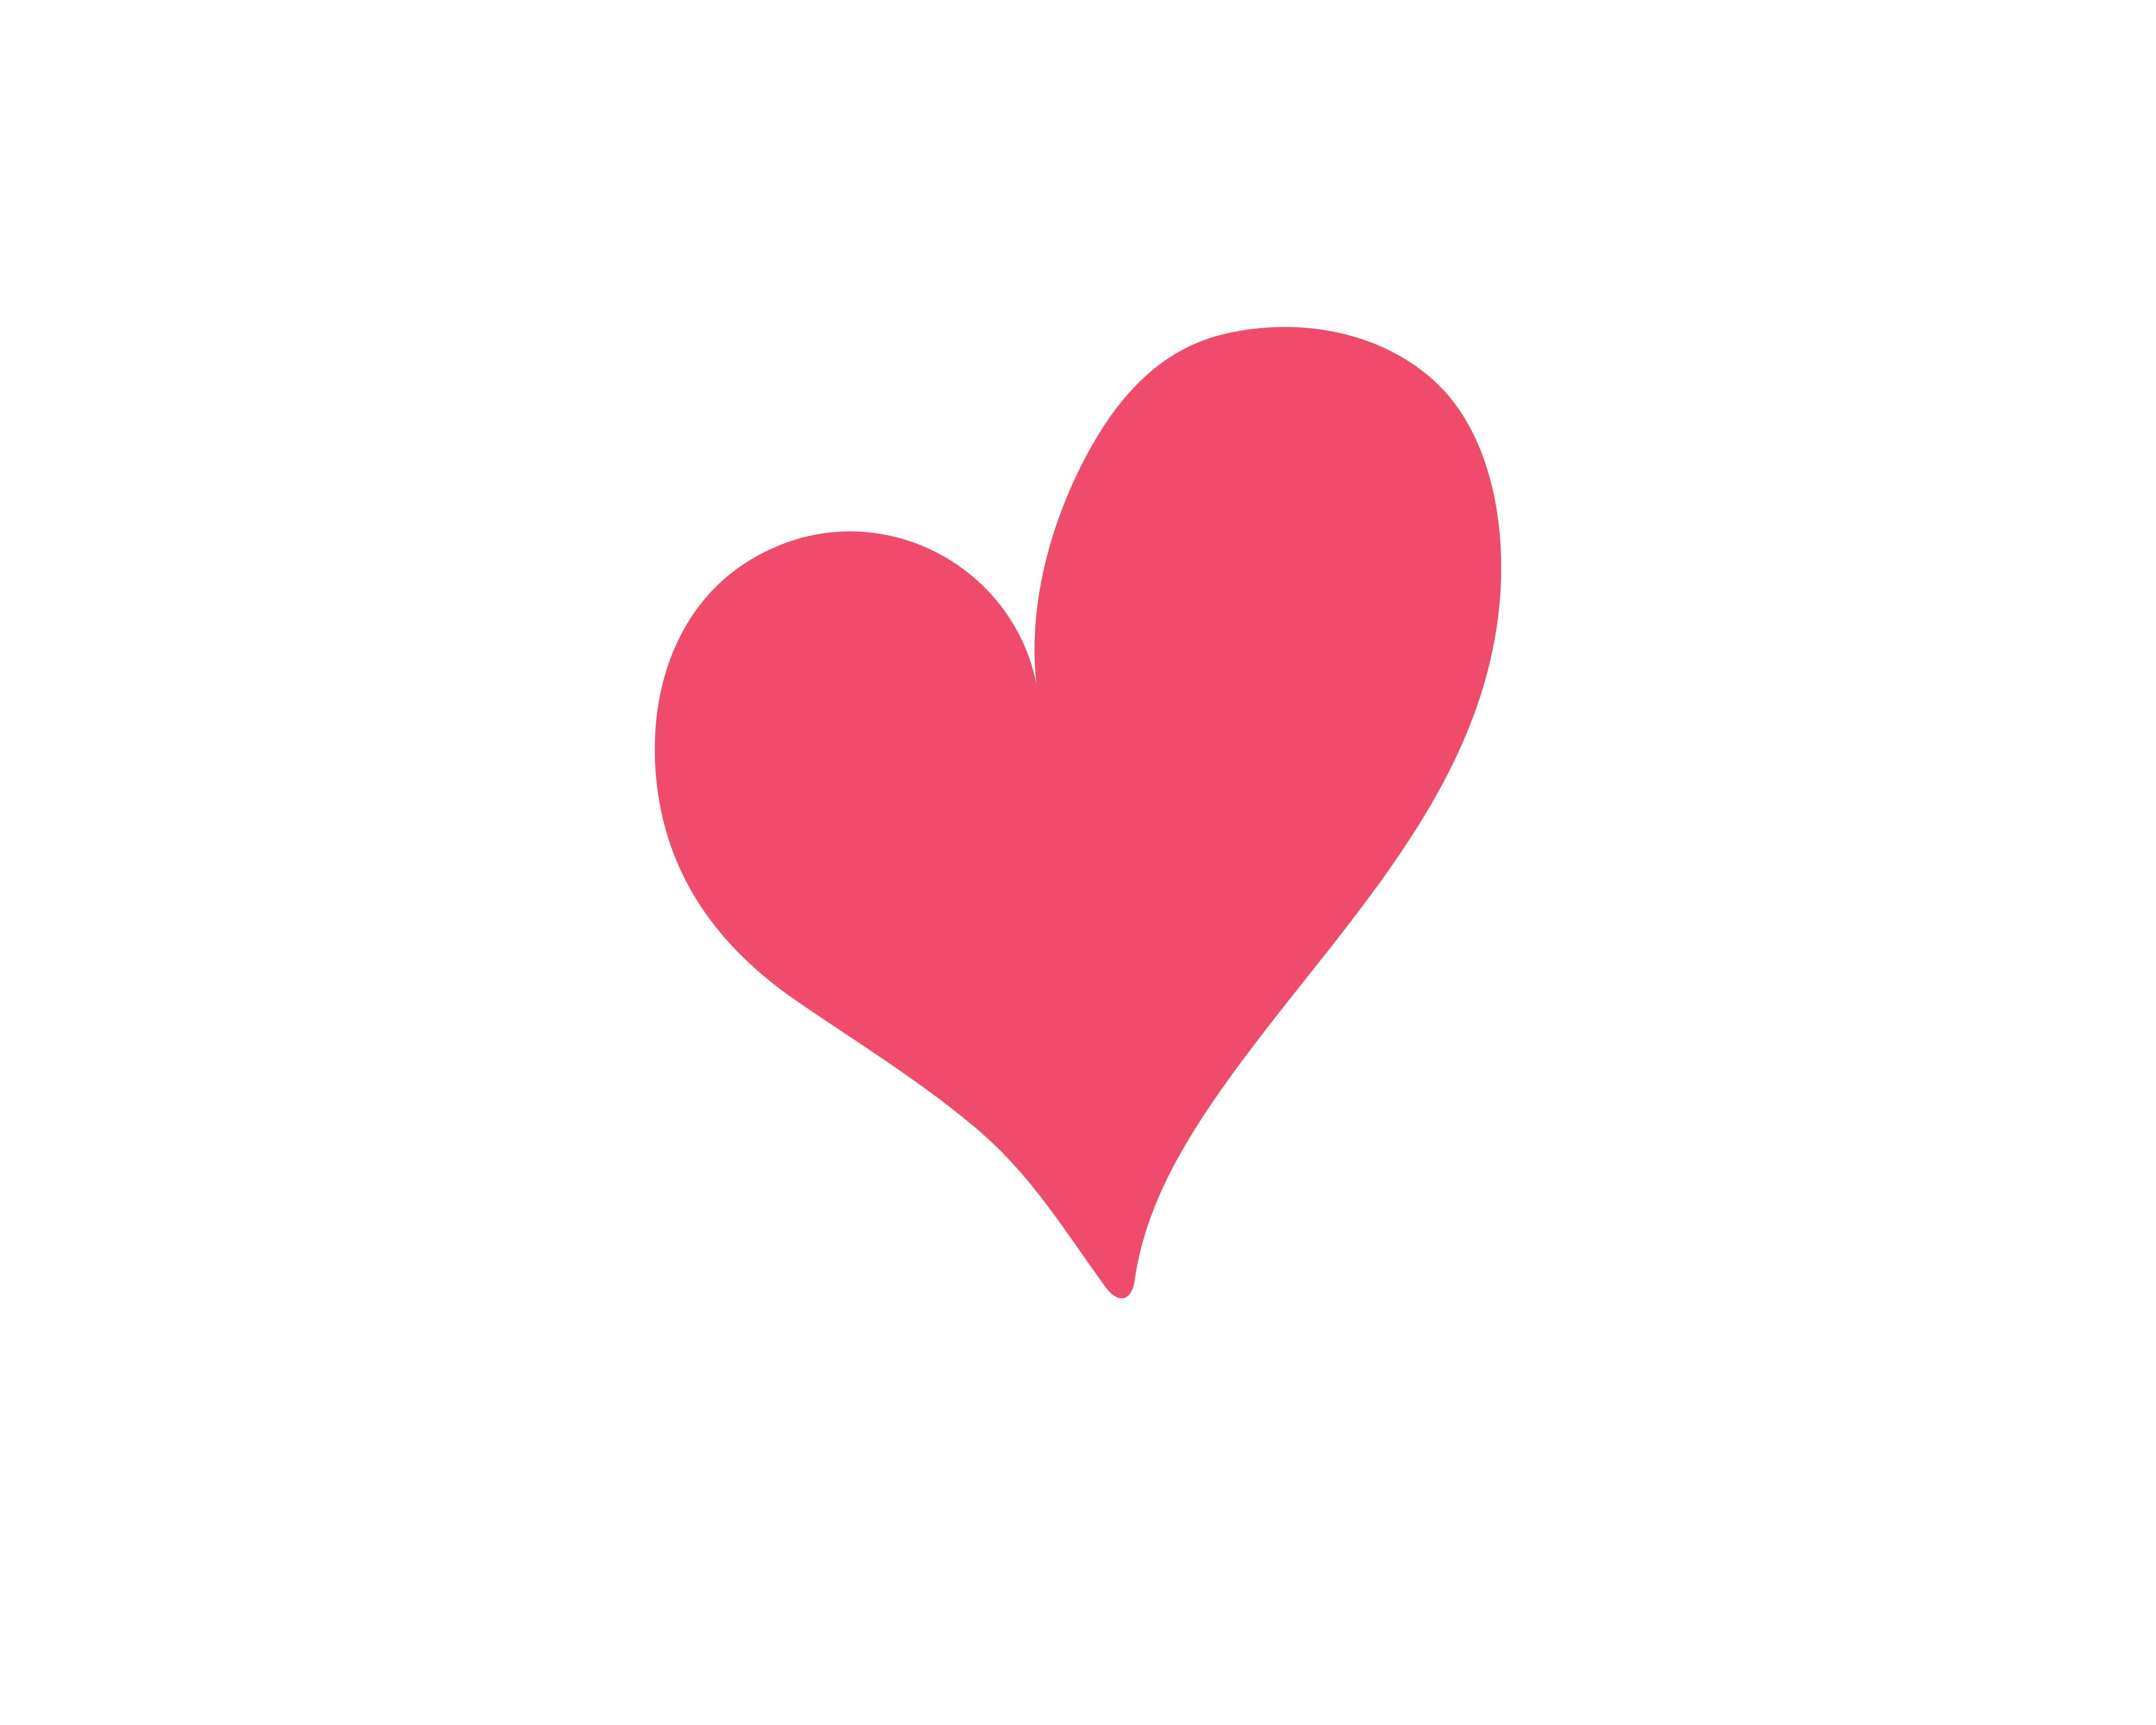 Love Heart Logo And Template Vector Art At Vecteezy